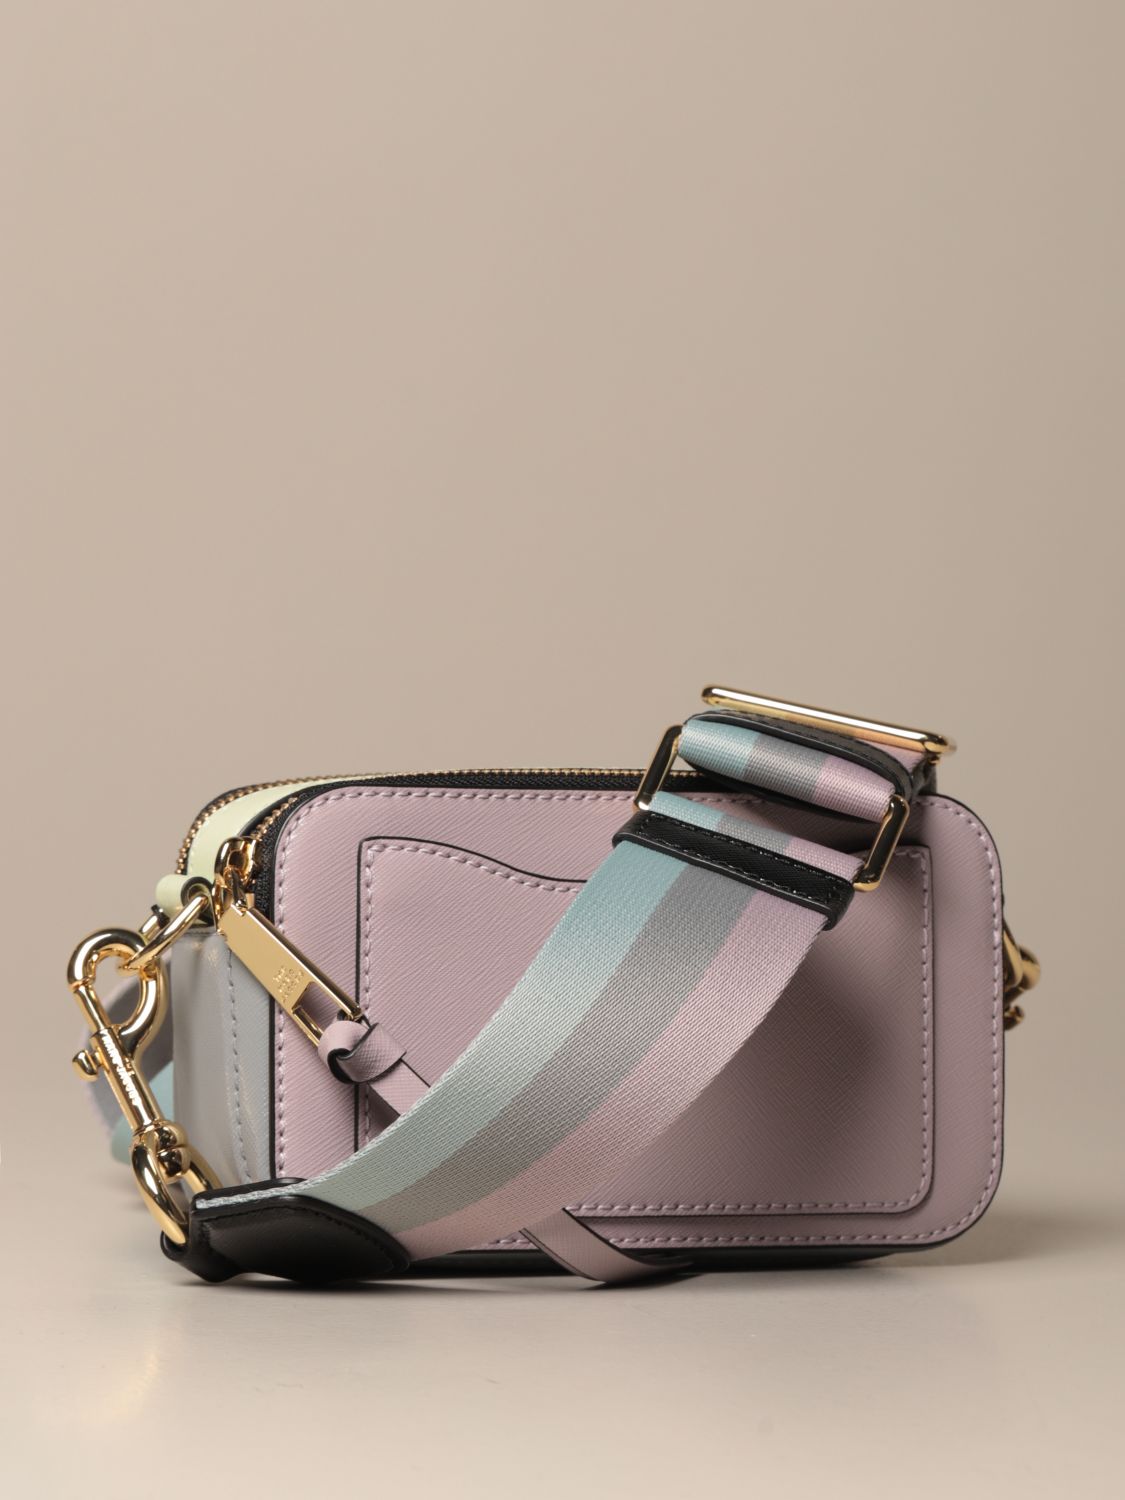 MARC JACOBS: The Snapshot multicolor bag - Lilac  Marc Jacobs handbag  M0012007 online at